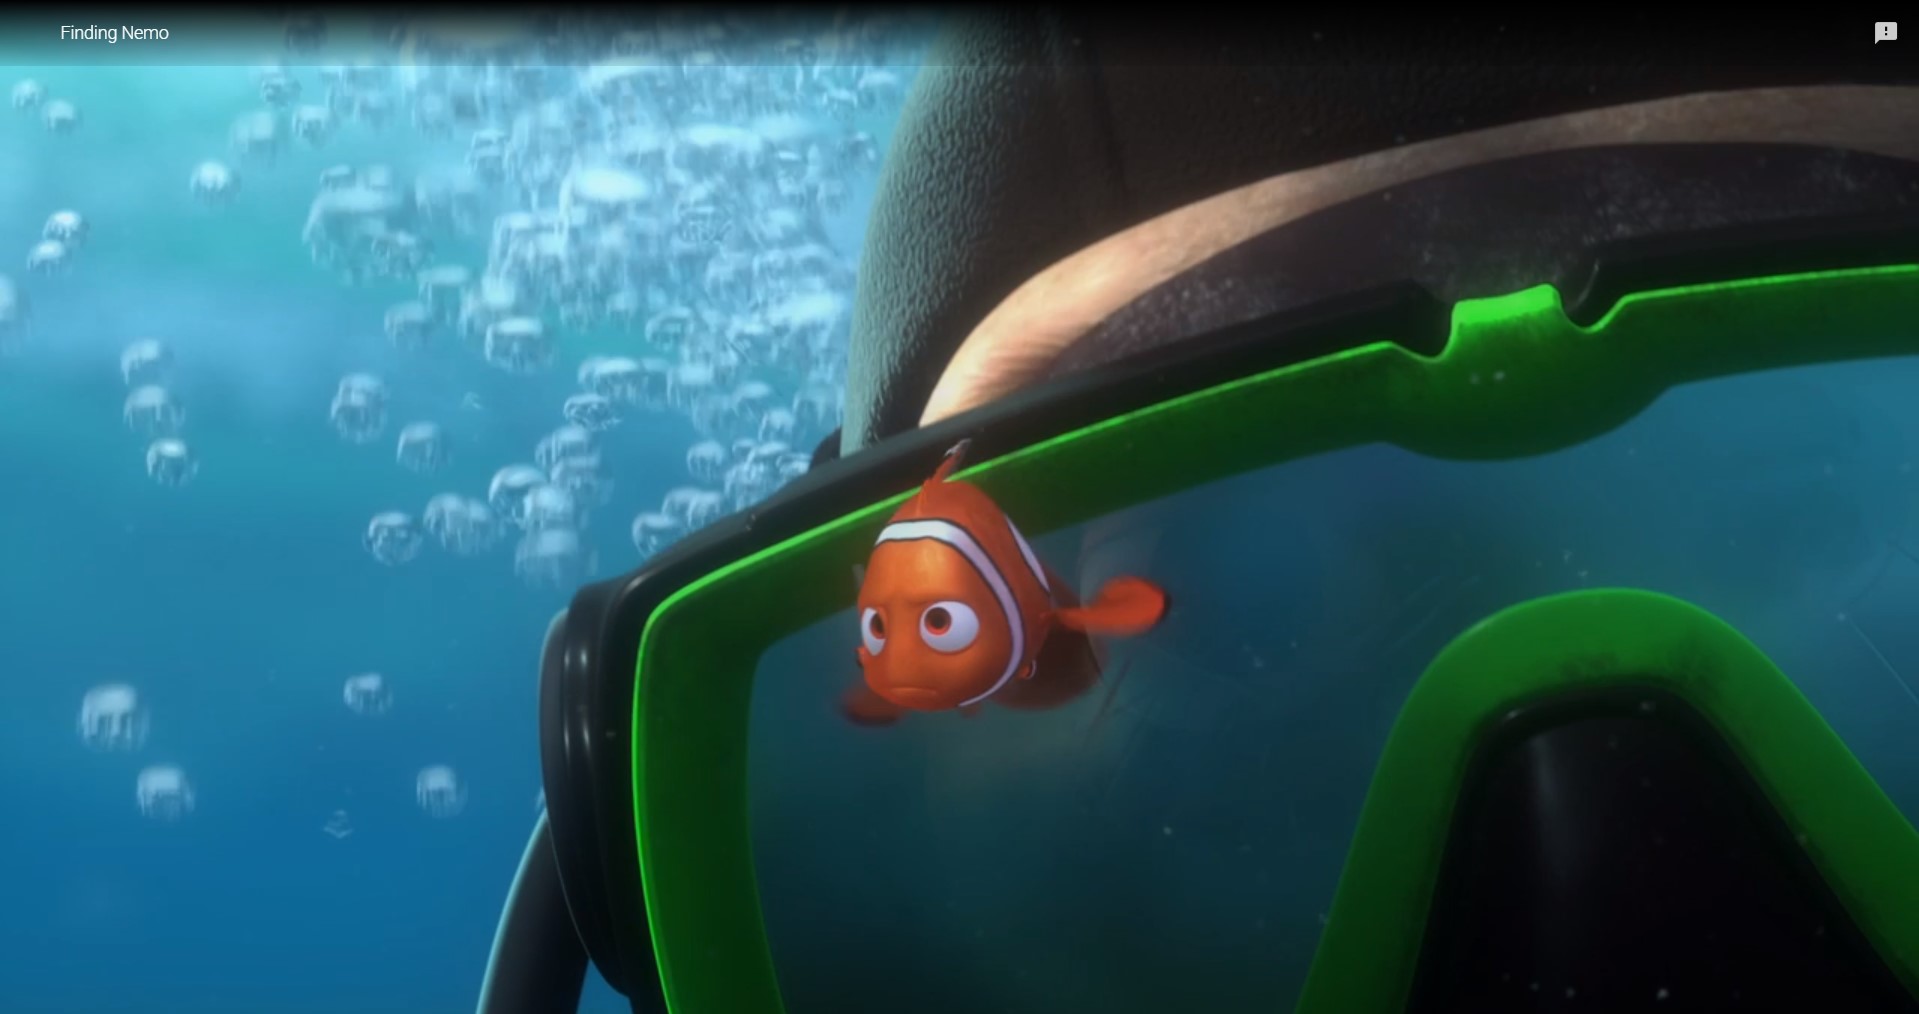 Des 251 — Digital Media Design Iii Nguyen Finding Nemo 3620